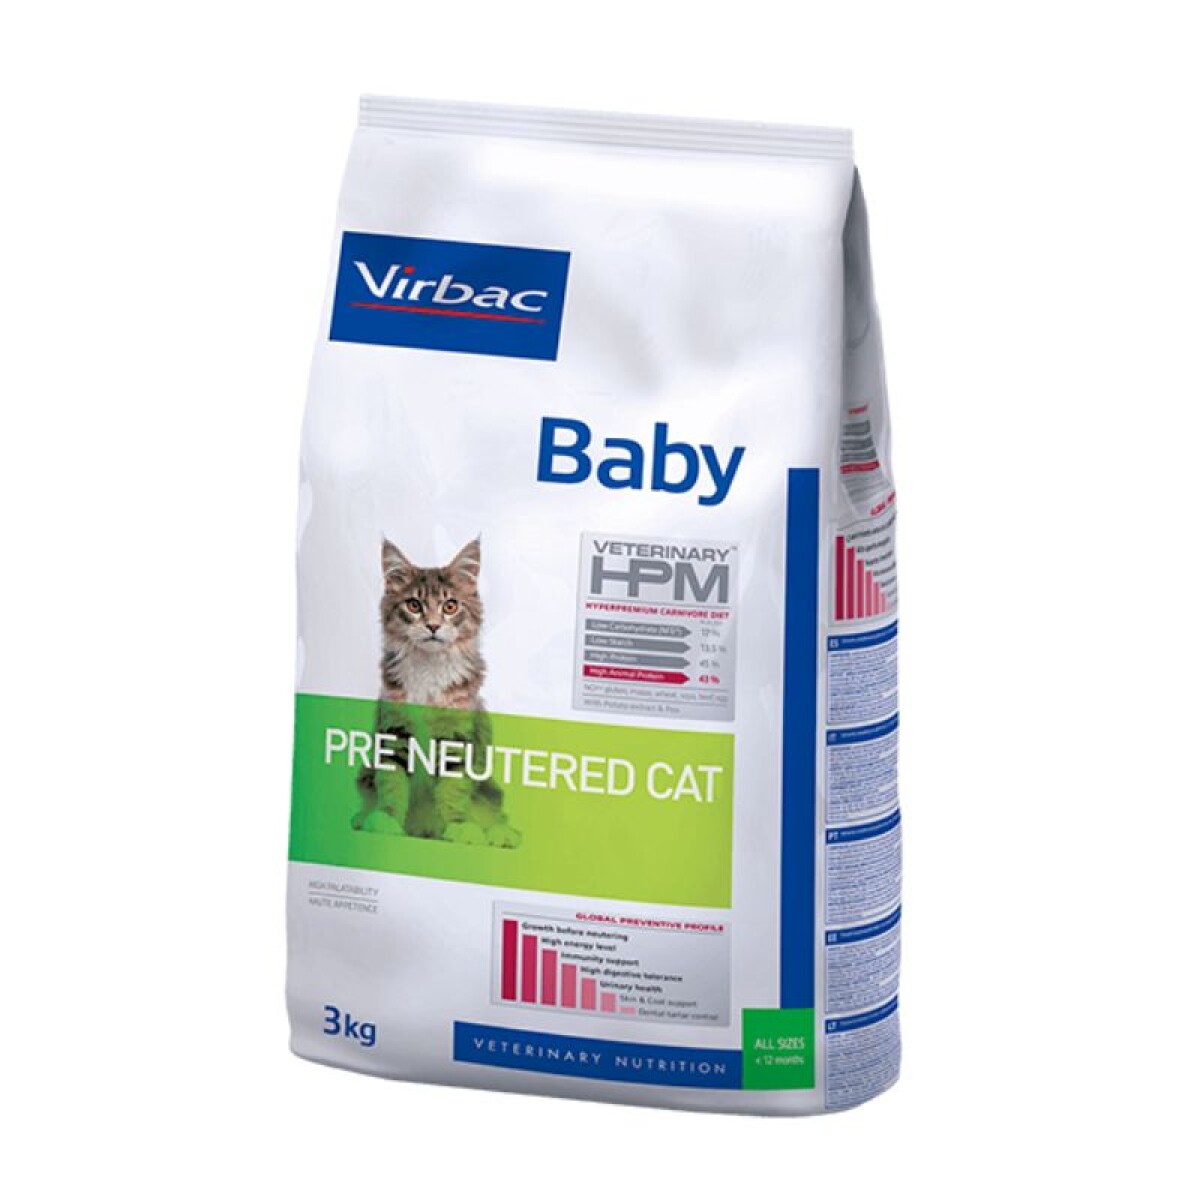 HPM BABY CAT 3KG - Hpm Baby Cat 3kg 